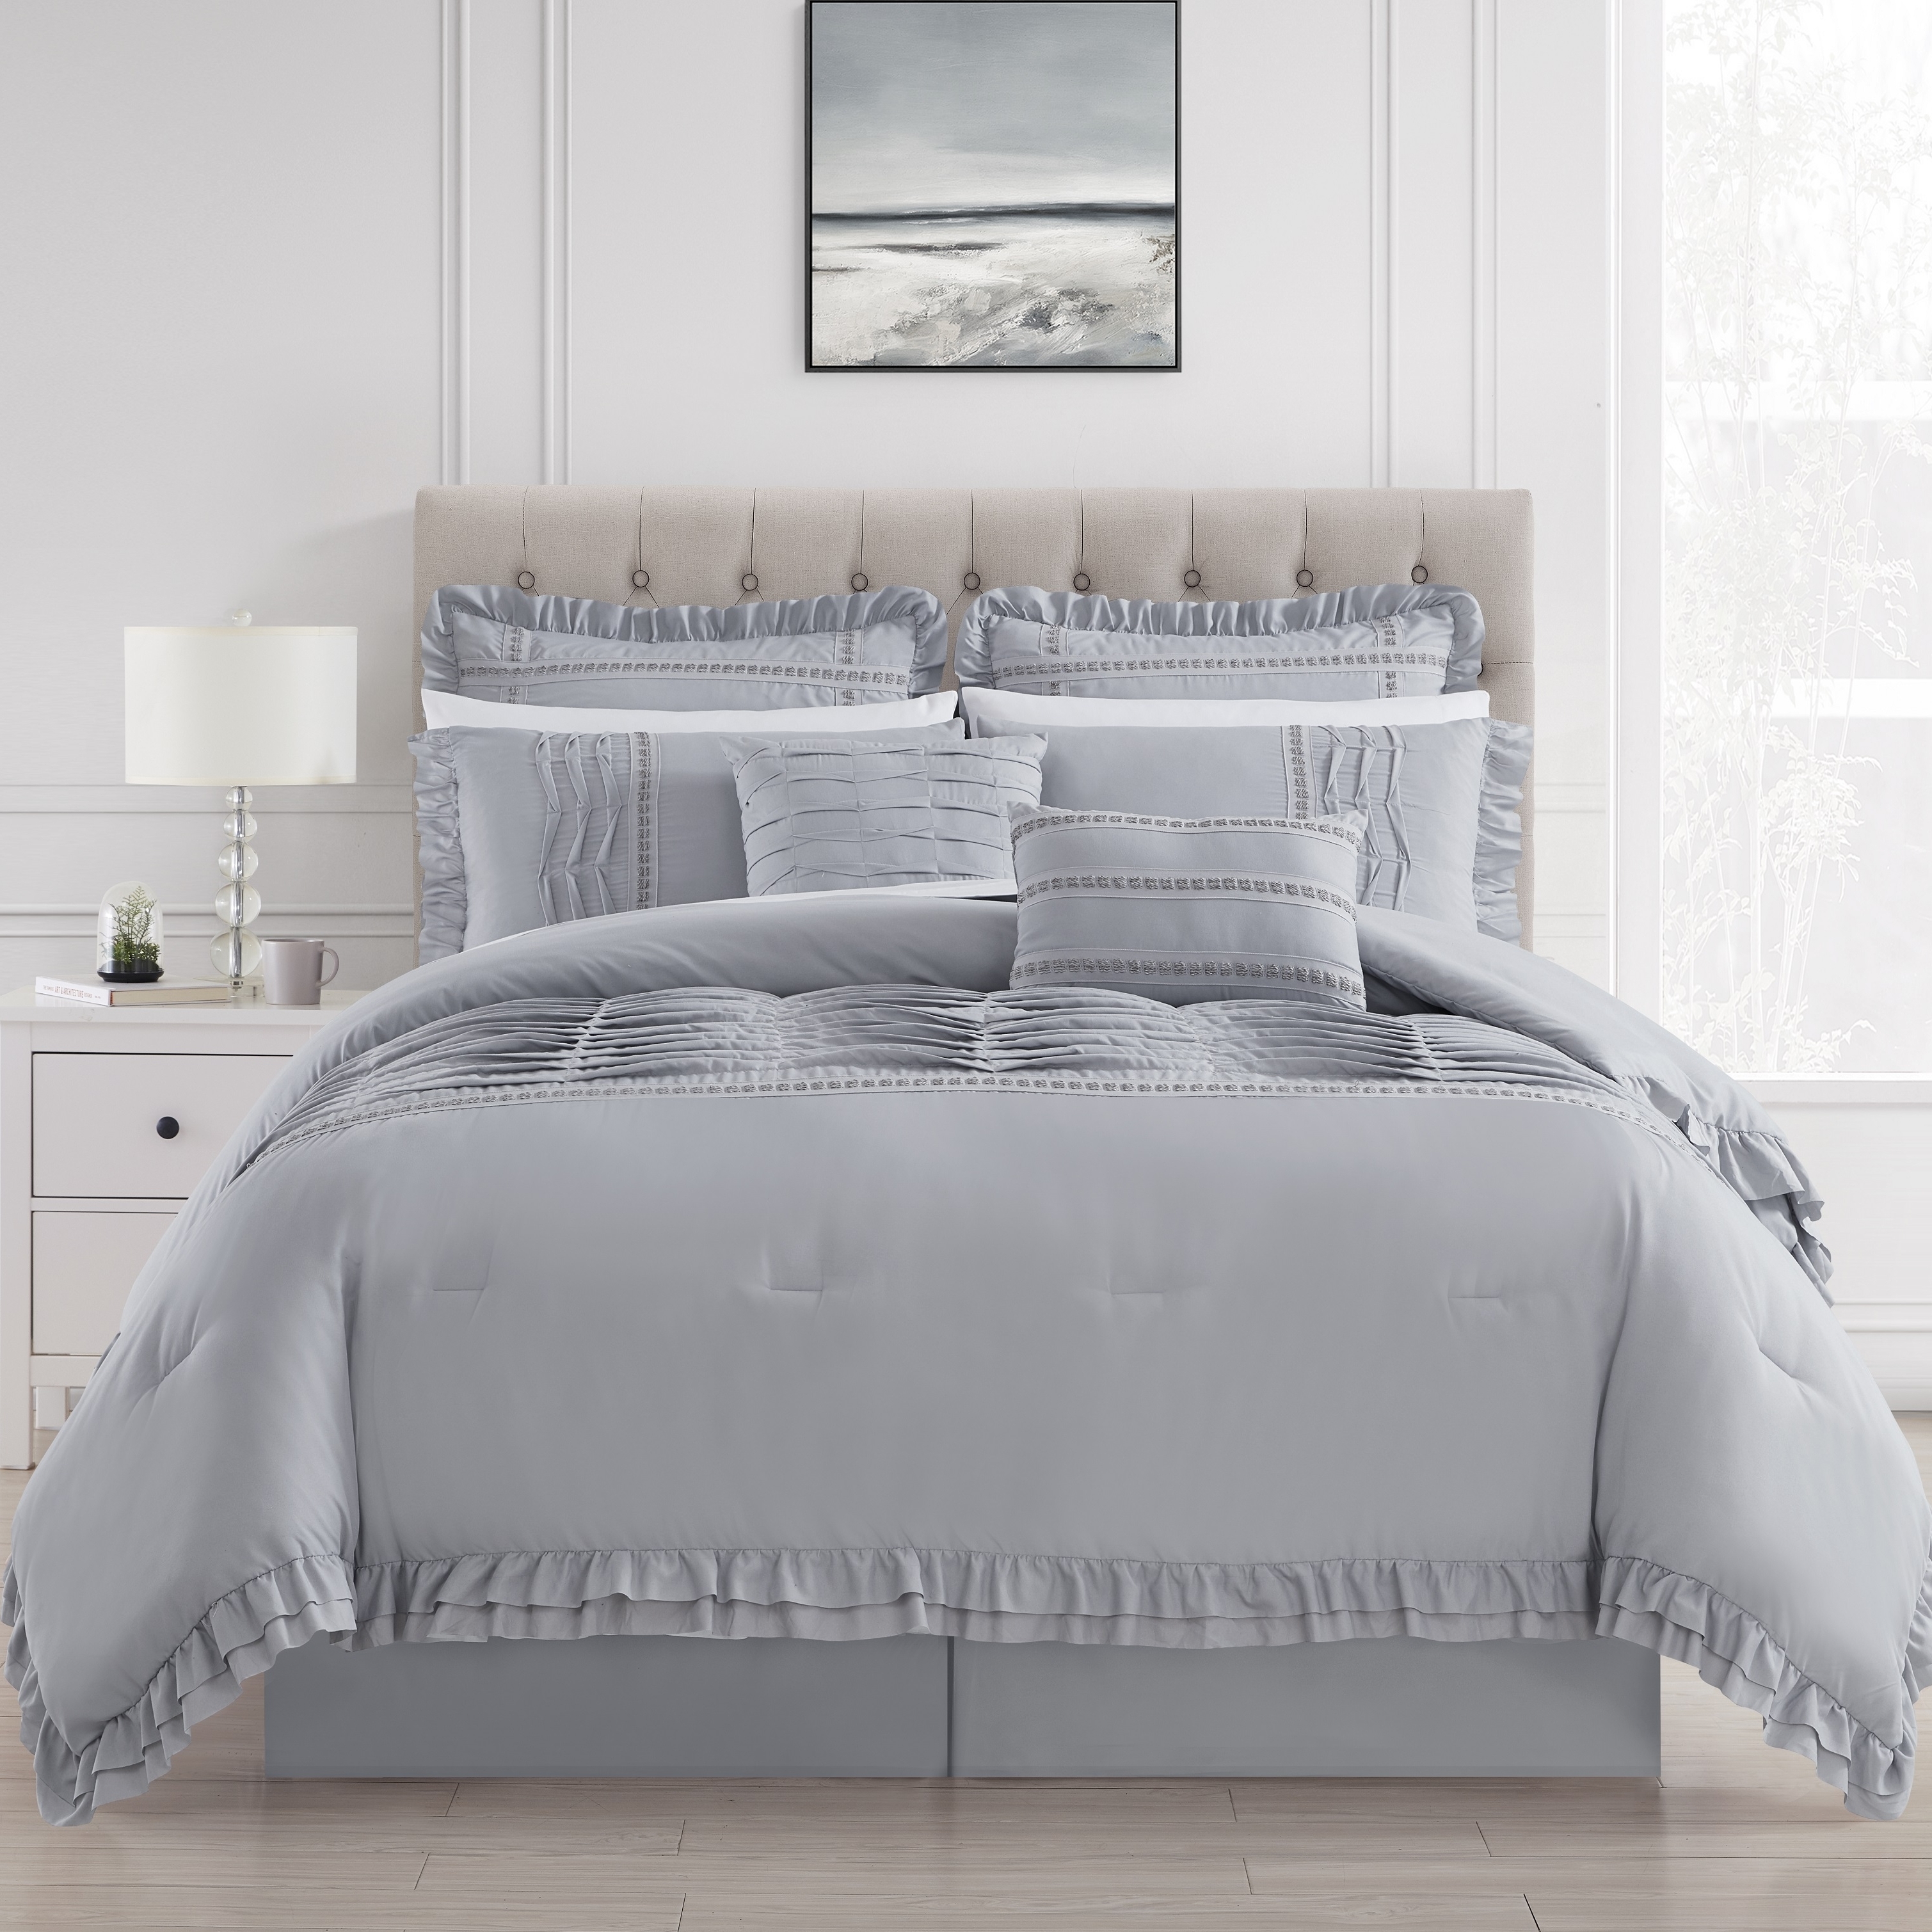 Yvonna 8 Piece Comforter Set Ruffled Pleated Flange Border Design Bedding - Blue, King